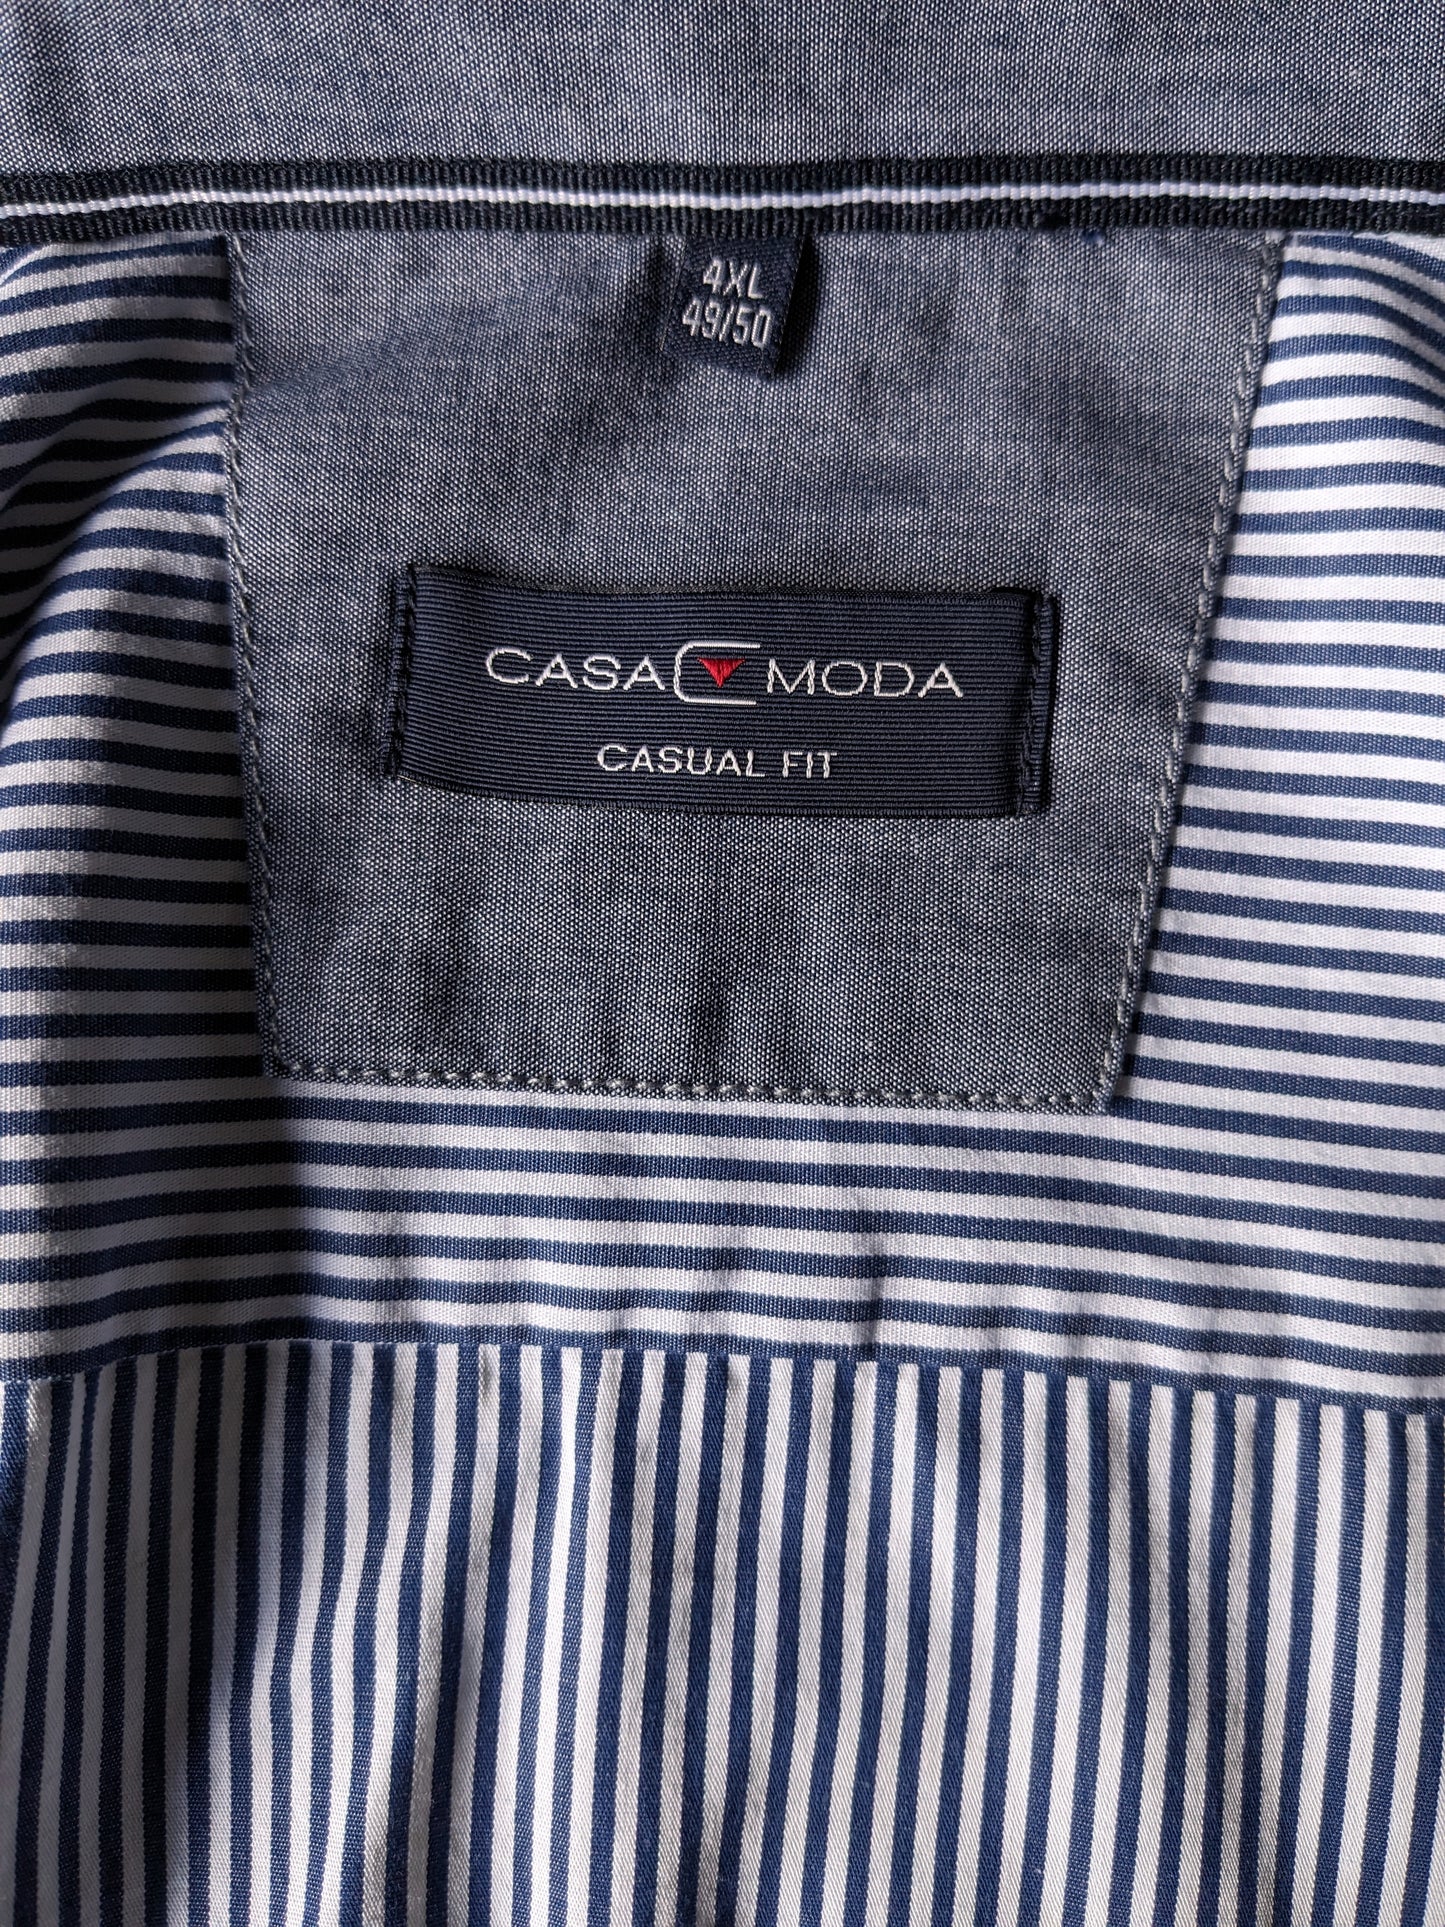 Casa Moda overhemd. Blauw Wit gestreept. Maat 4XL / XXXXL. Casual Fit.